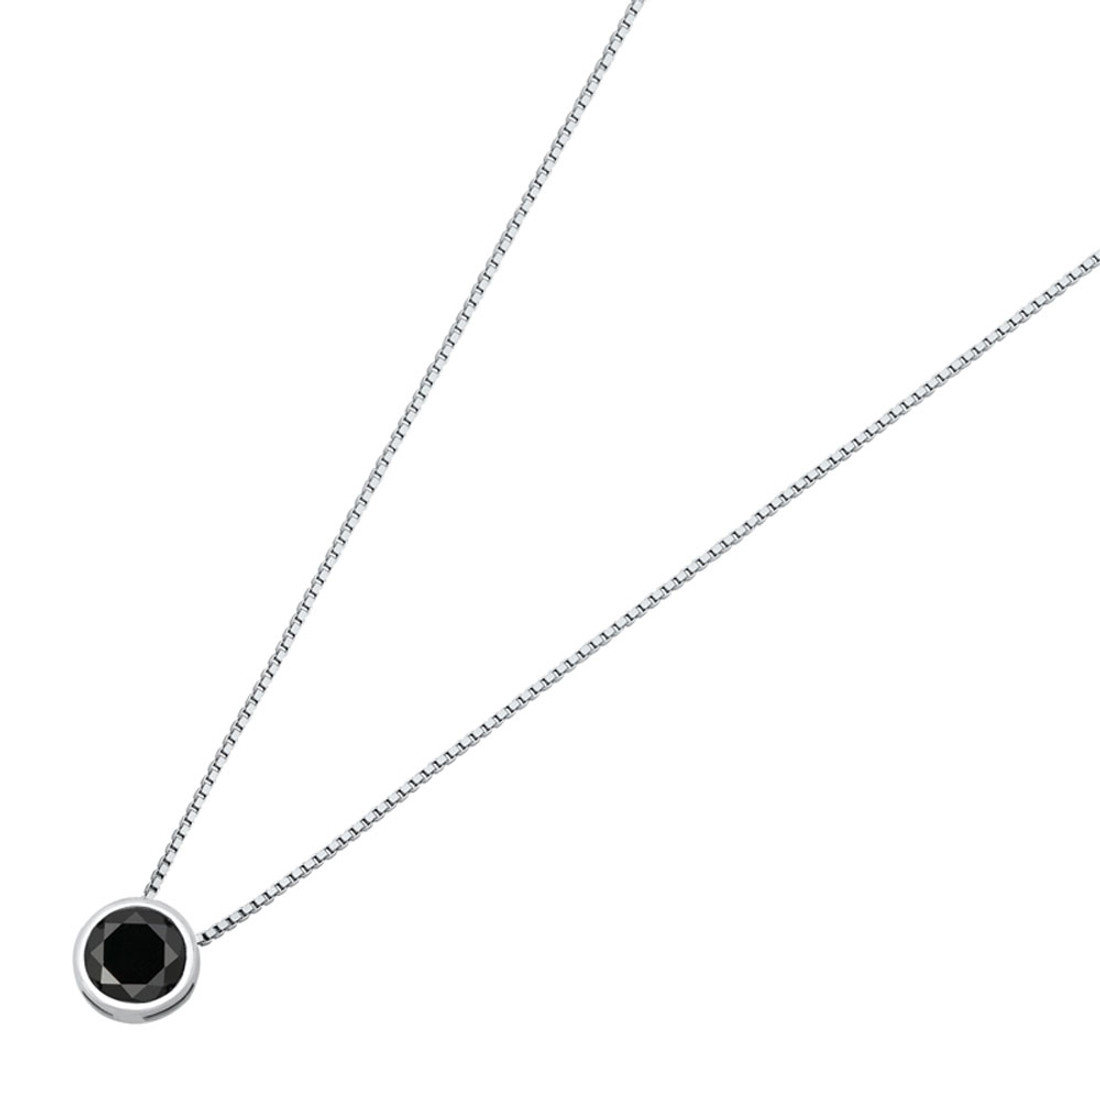 Black CZ sterling silver necklace. 